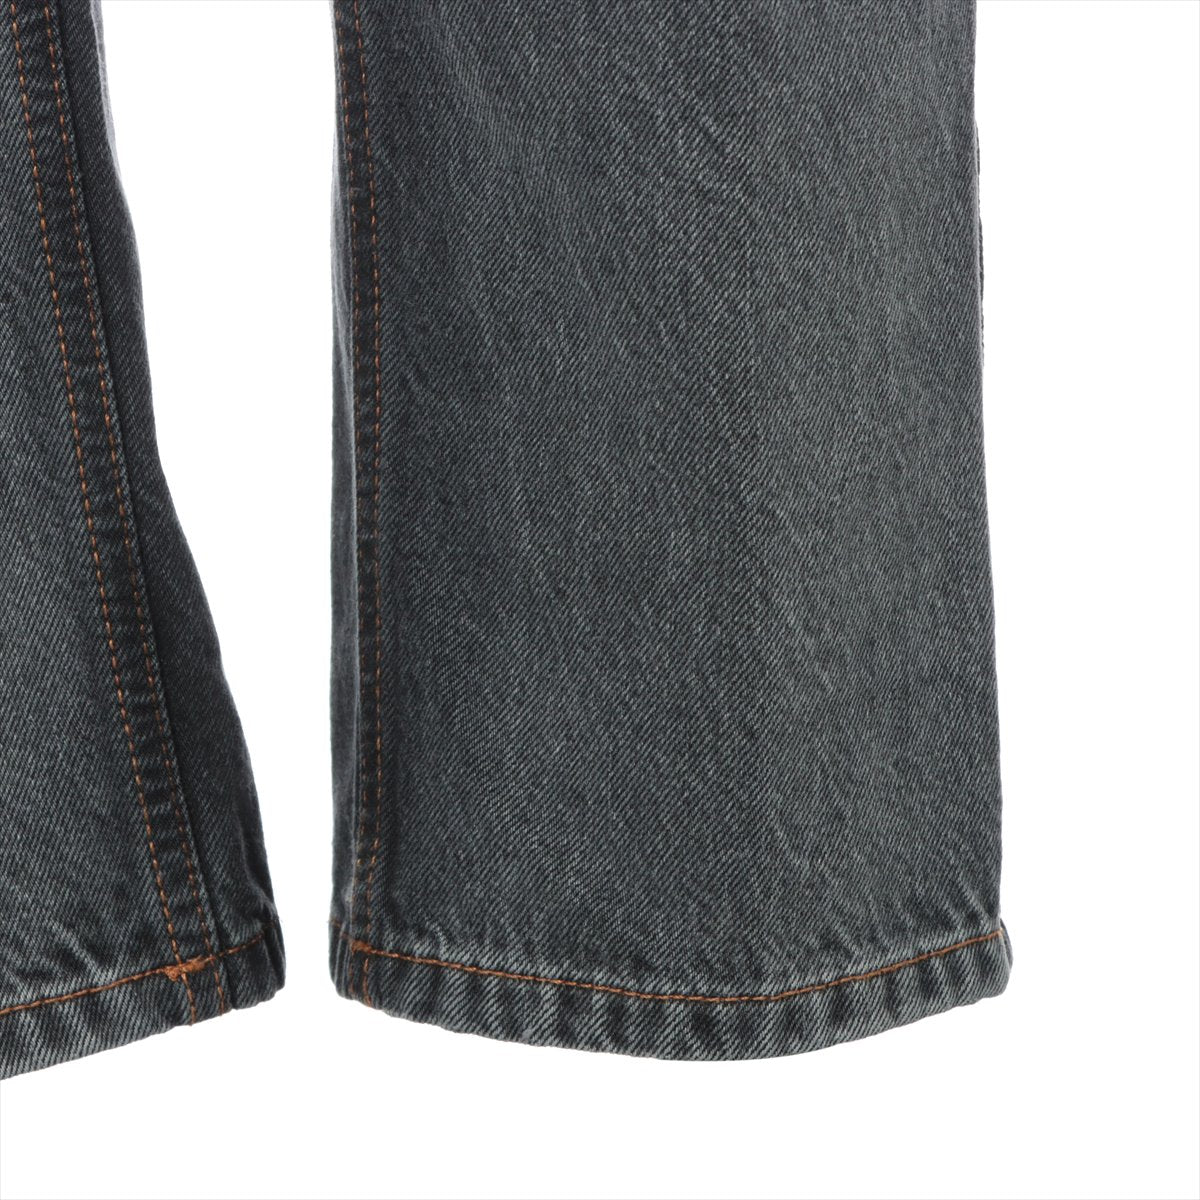 Loewe Anagram Cotton Denim pants 44 Men's Grey  H526Y11X20